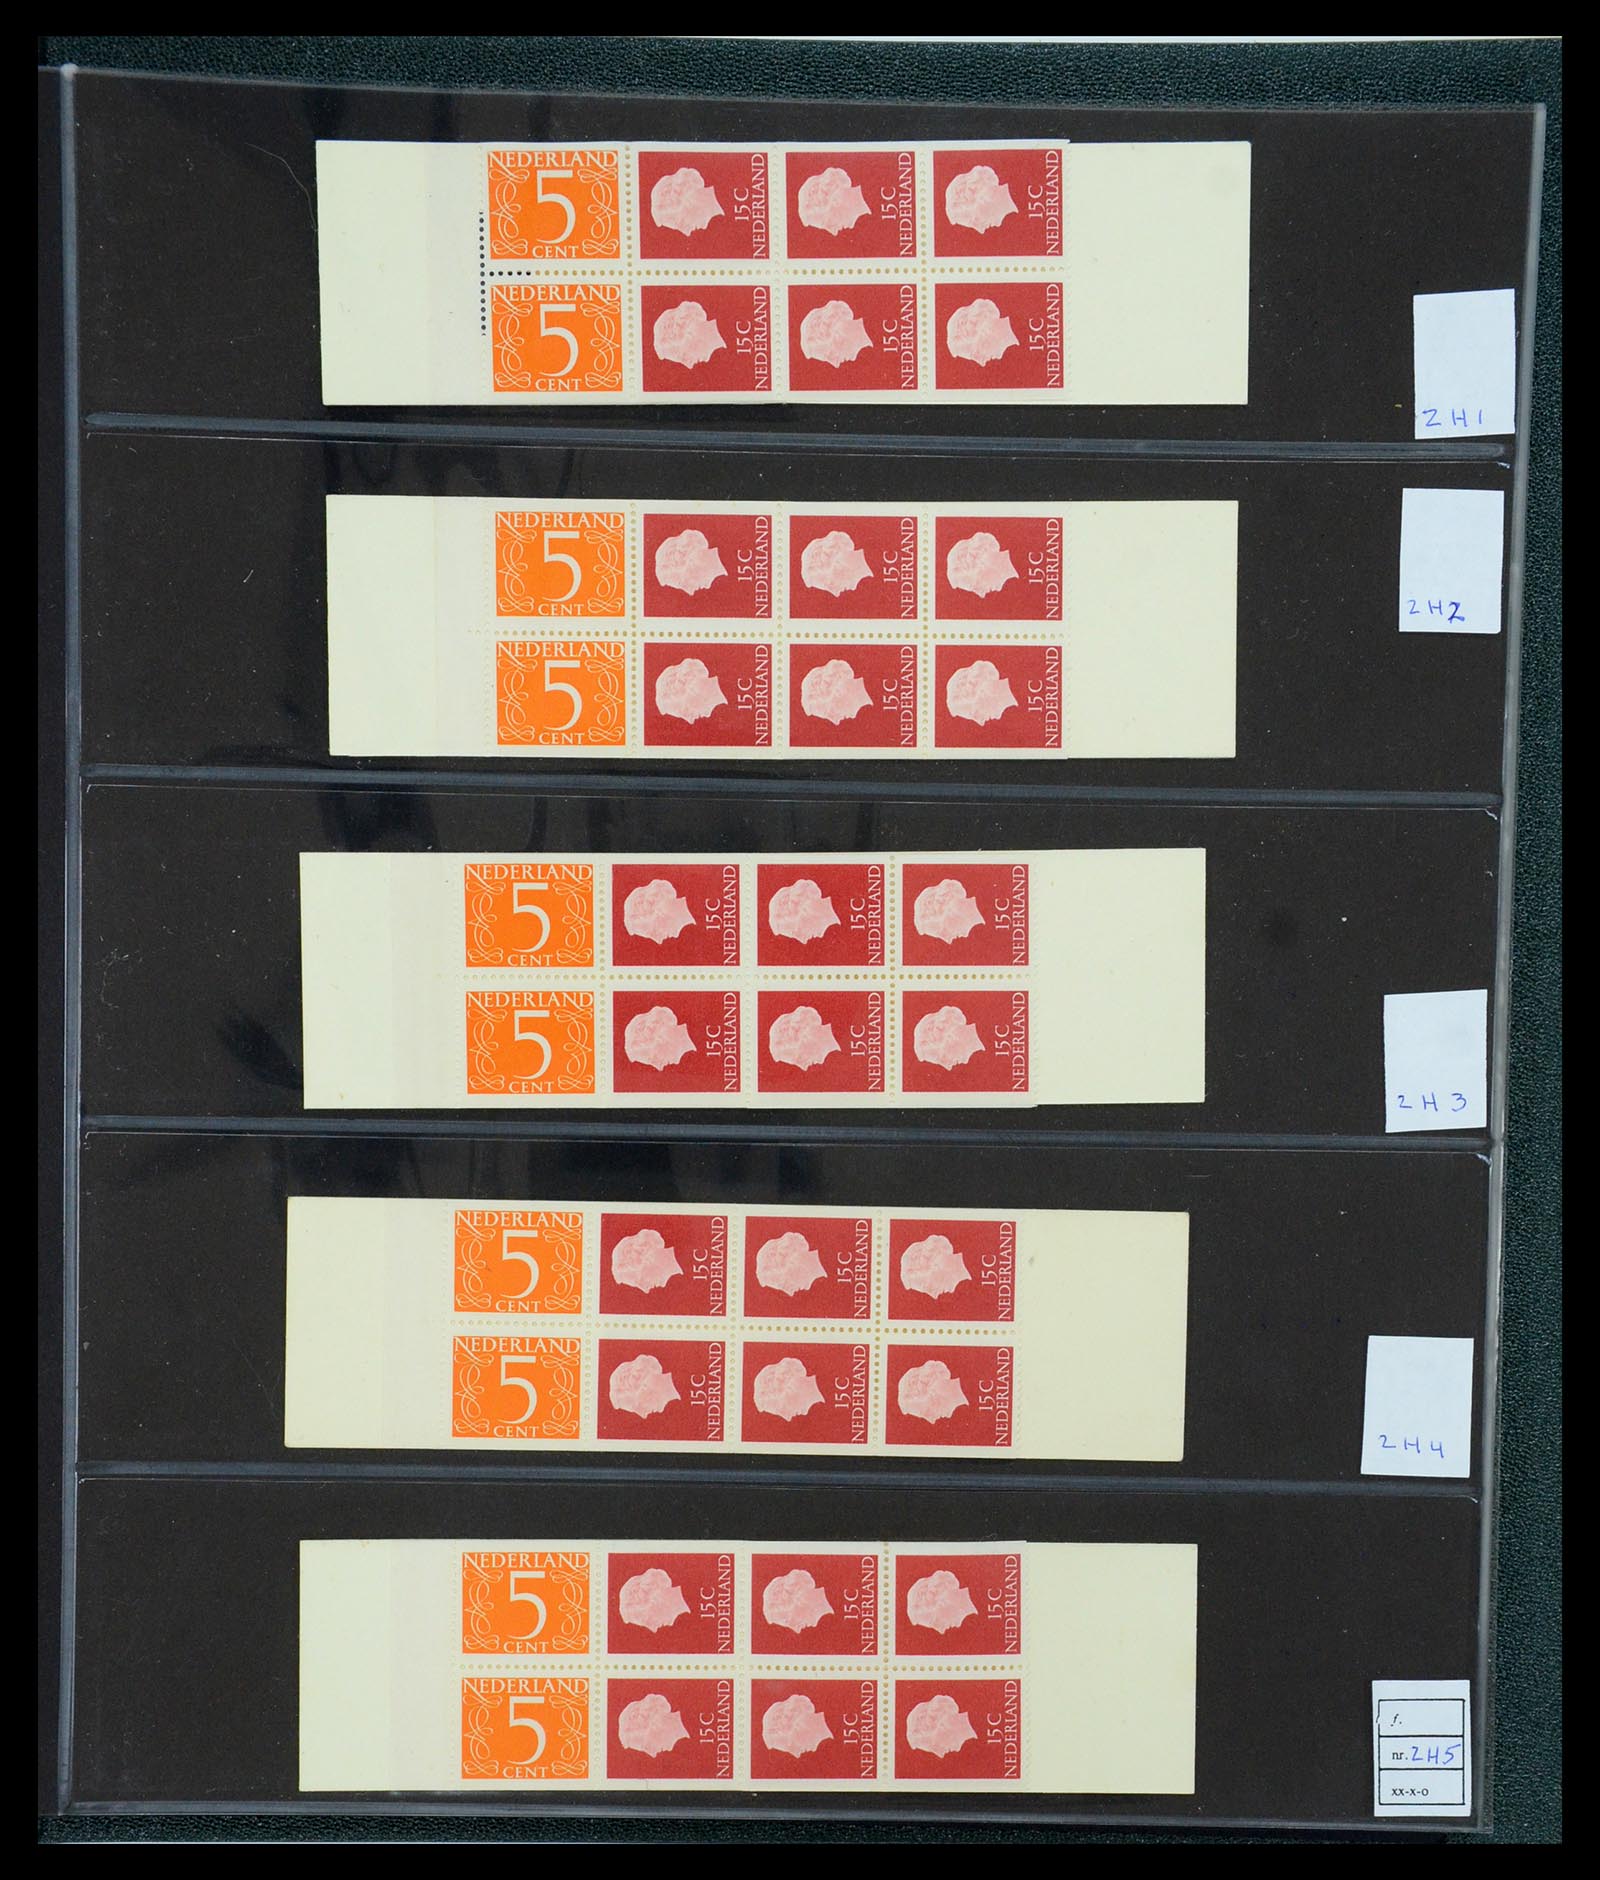 35705 011 - Stamp Collection 35705 Netherlands stamp booklets 1964-2000.